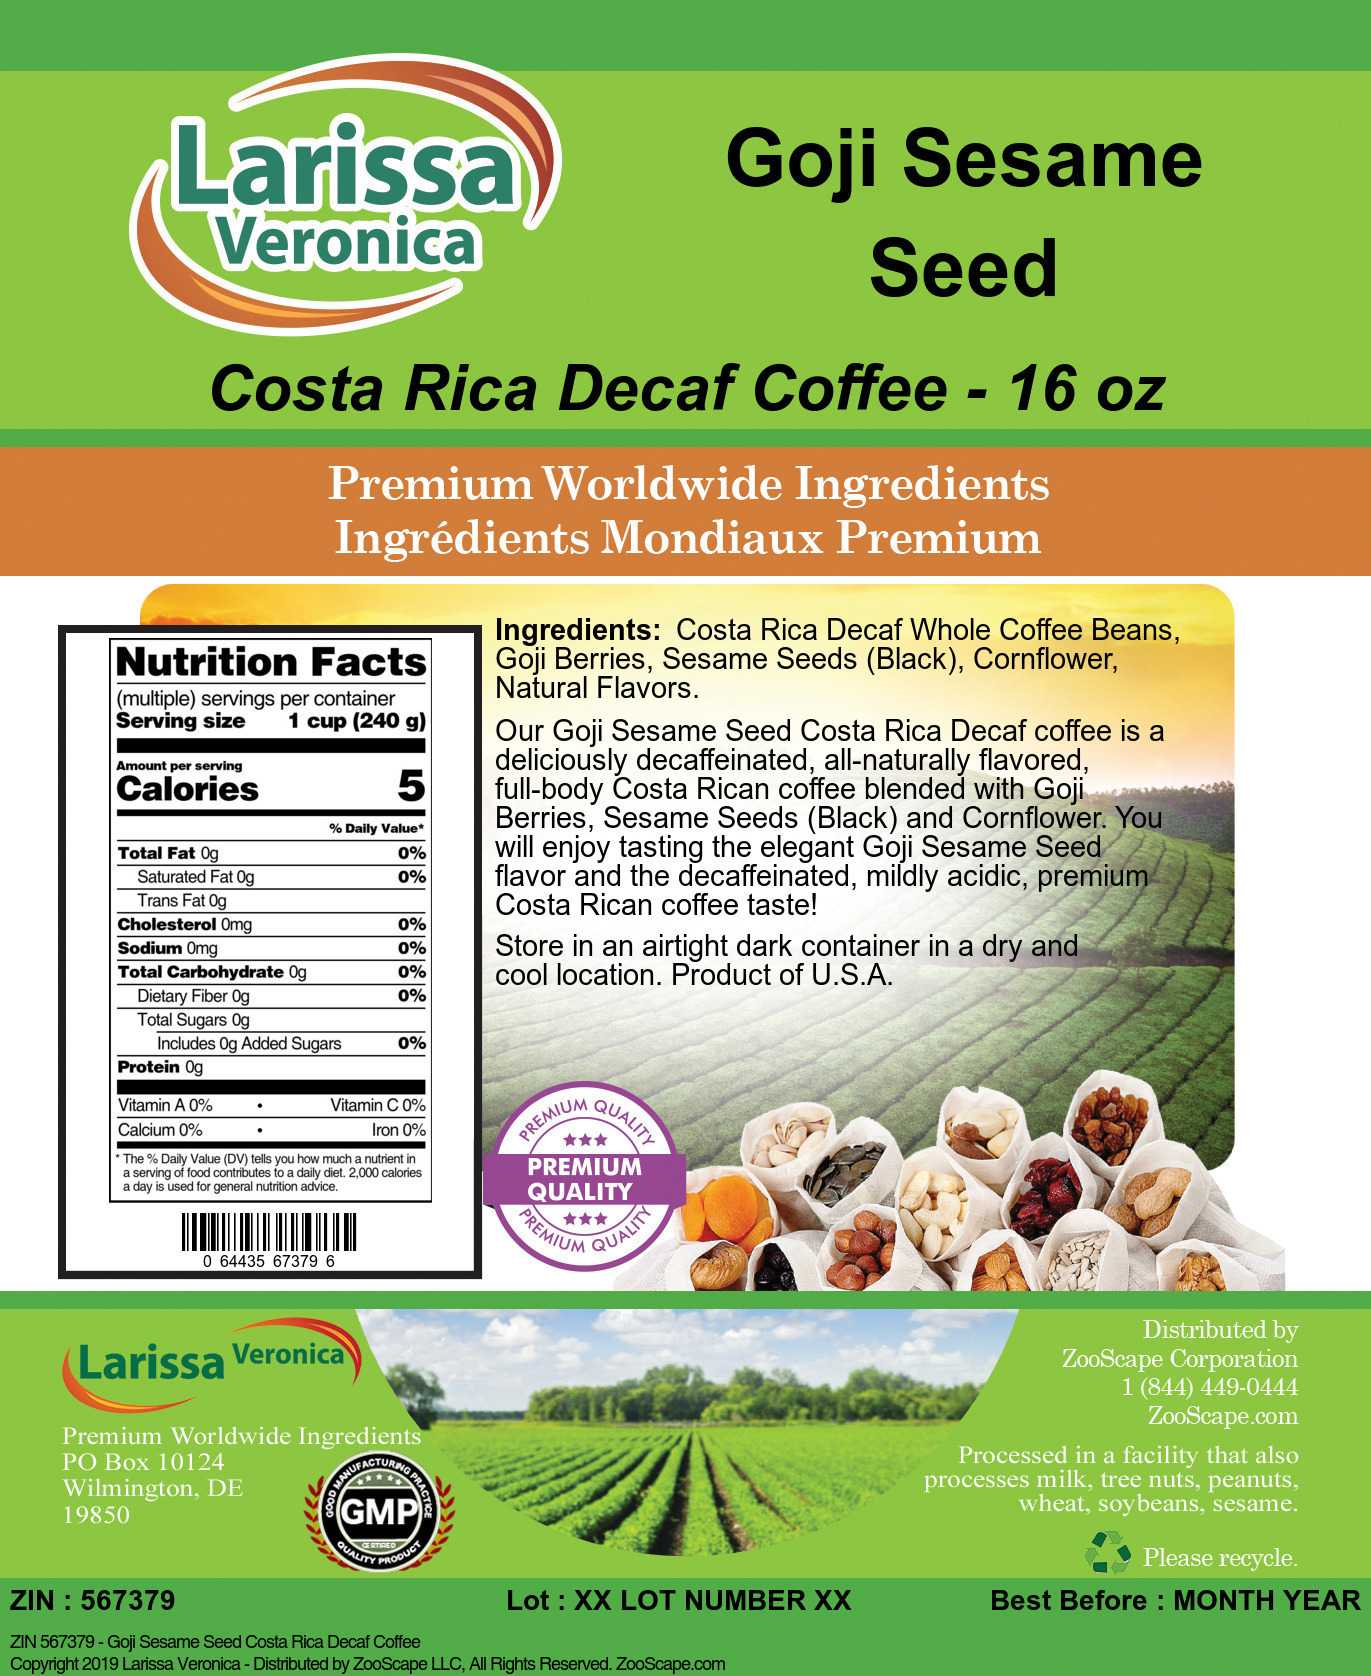 Goji Sesame Seed Costa Rica Decaf Coffee - Label